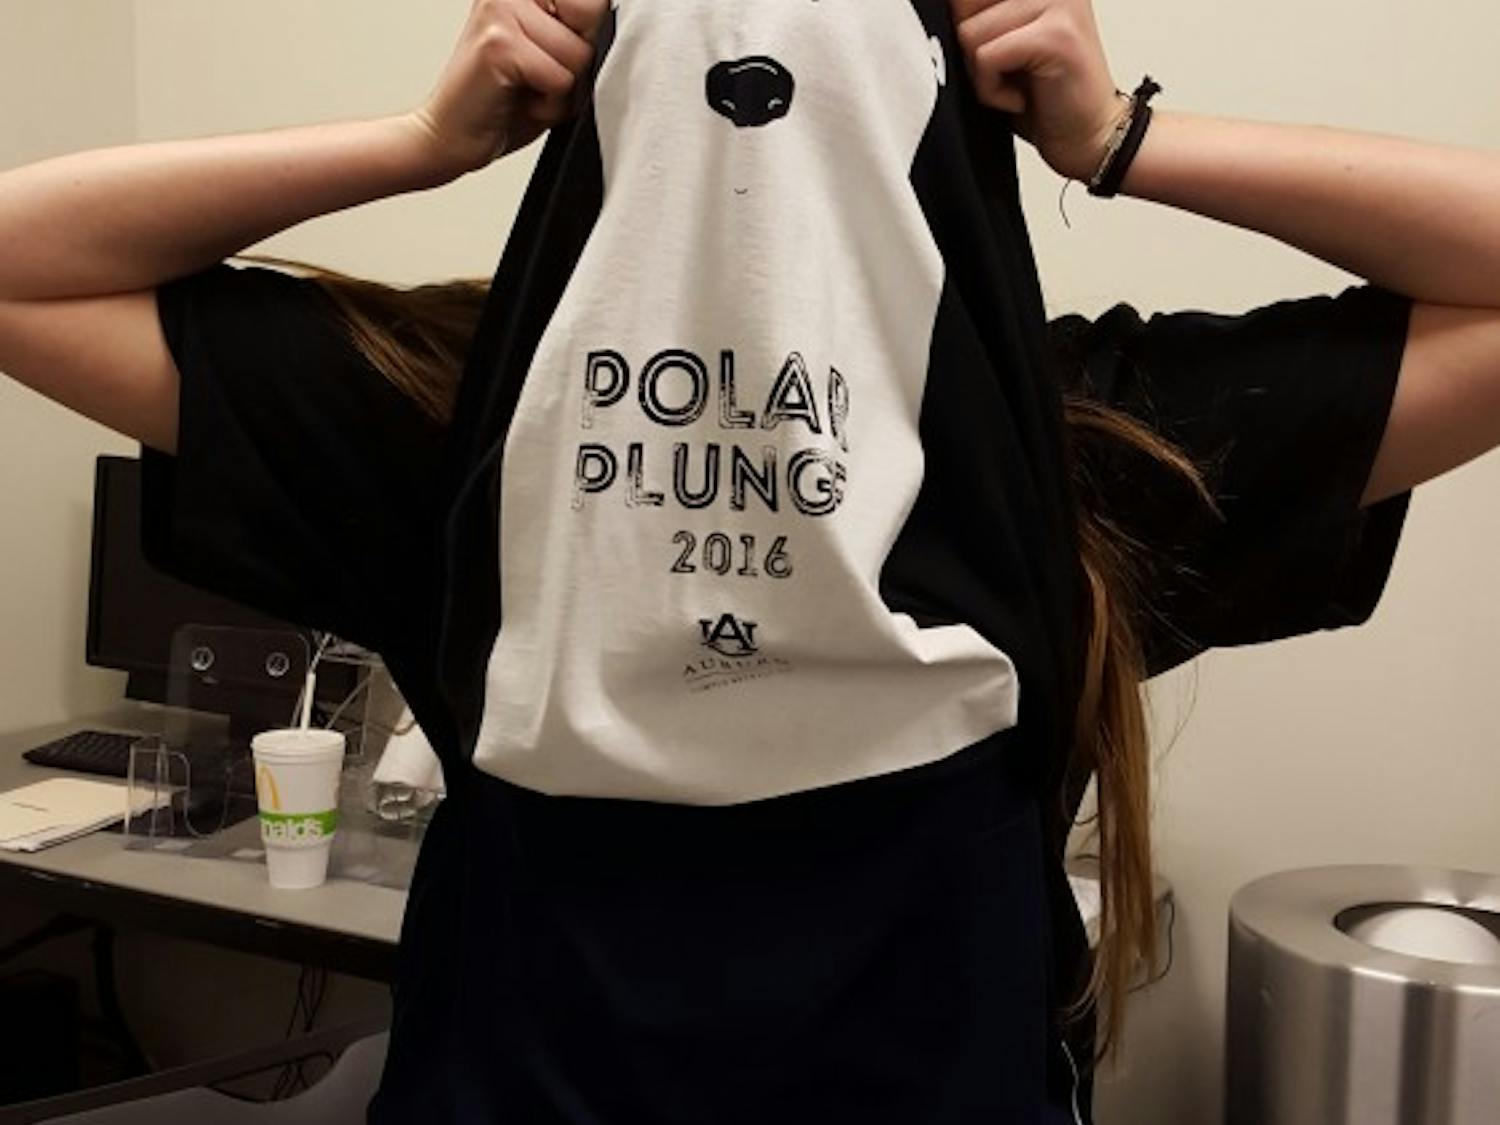 Polar Plunge Shirt 2016-2